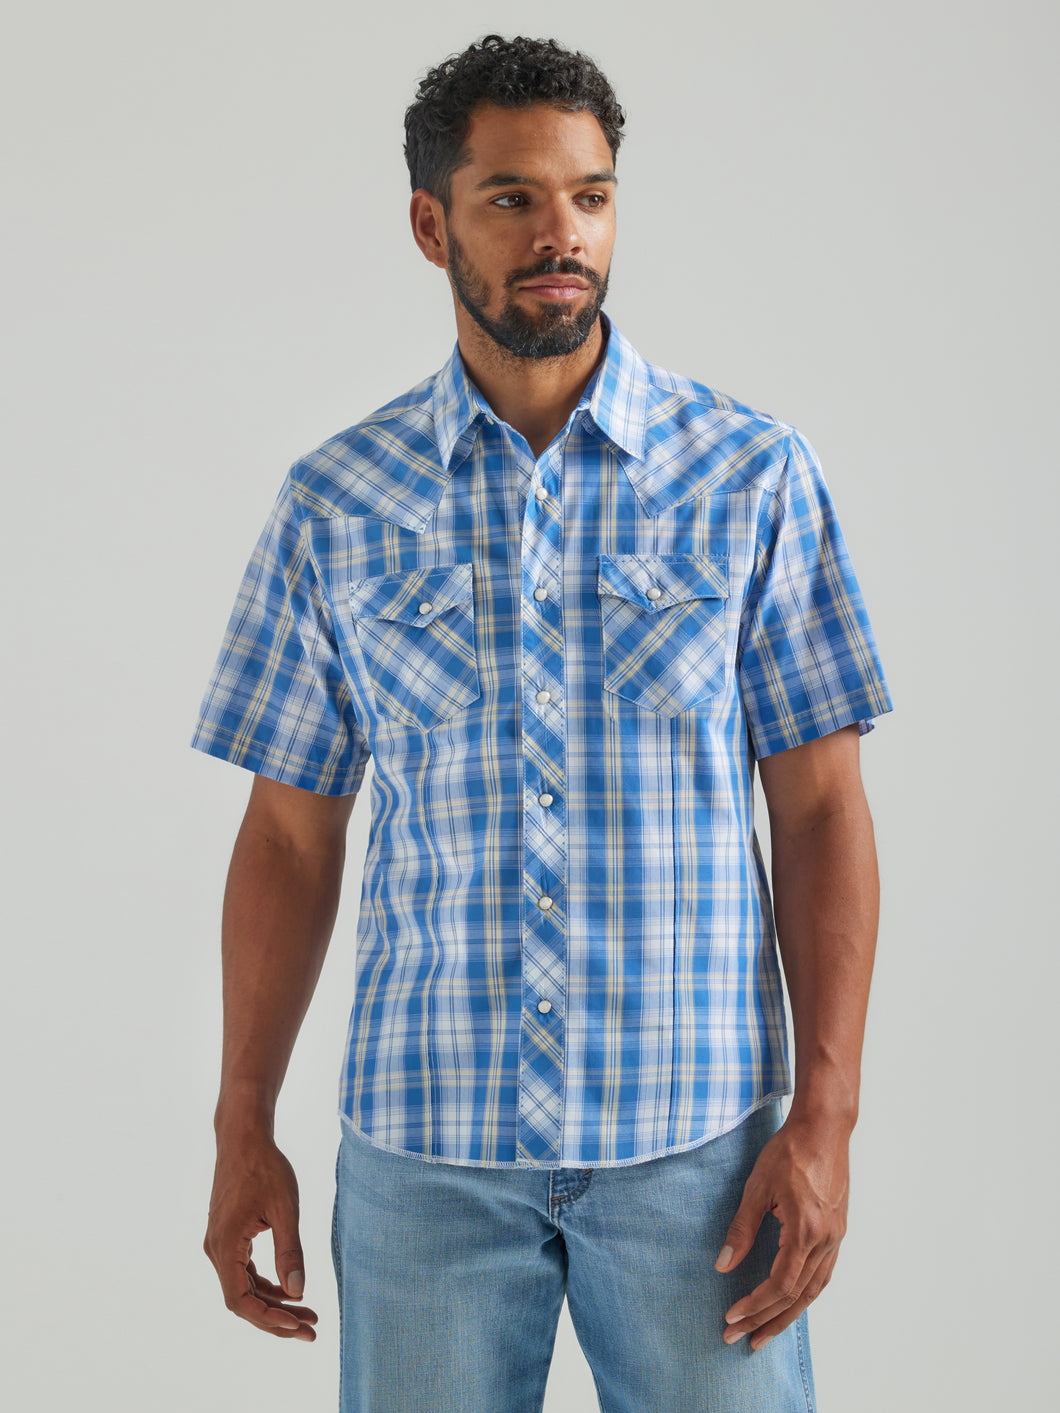 Pard's Western Shop Wrangler Men's Blue/White Plaid Short Sleeve Fashion Snap Western Shirt